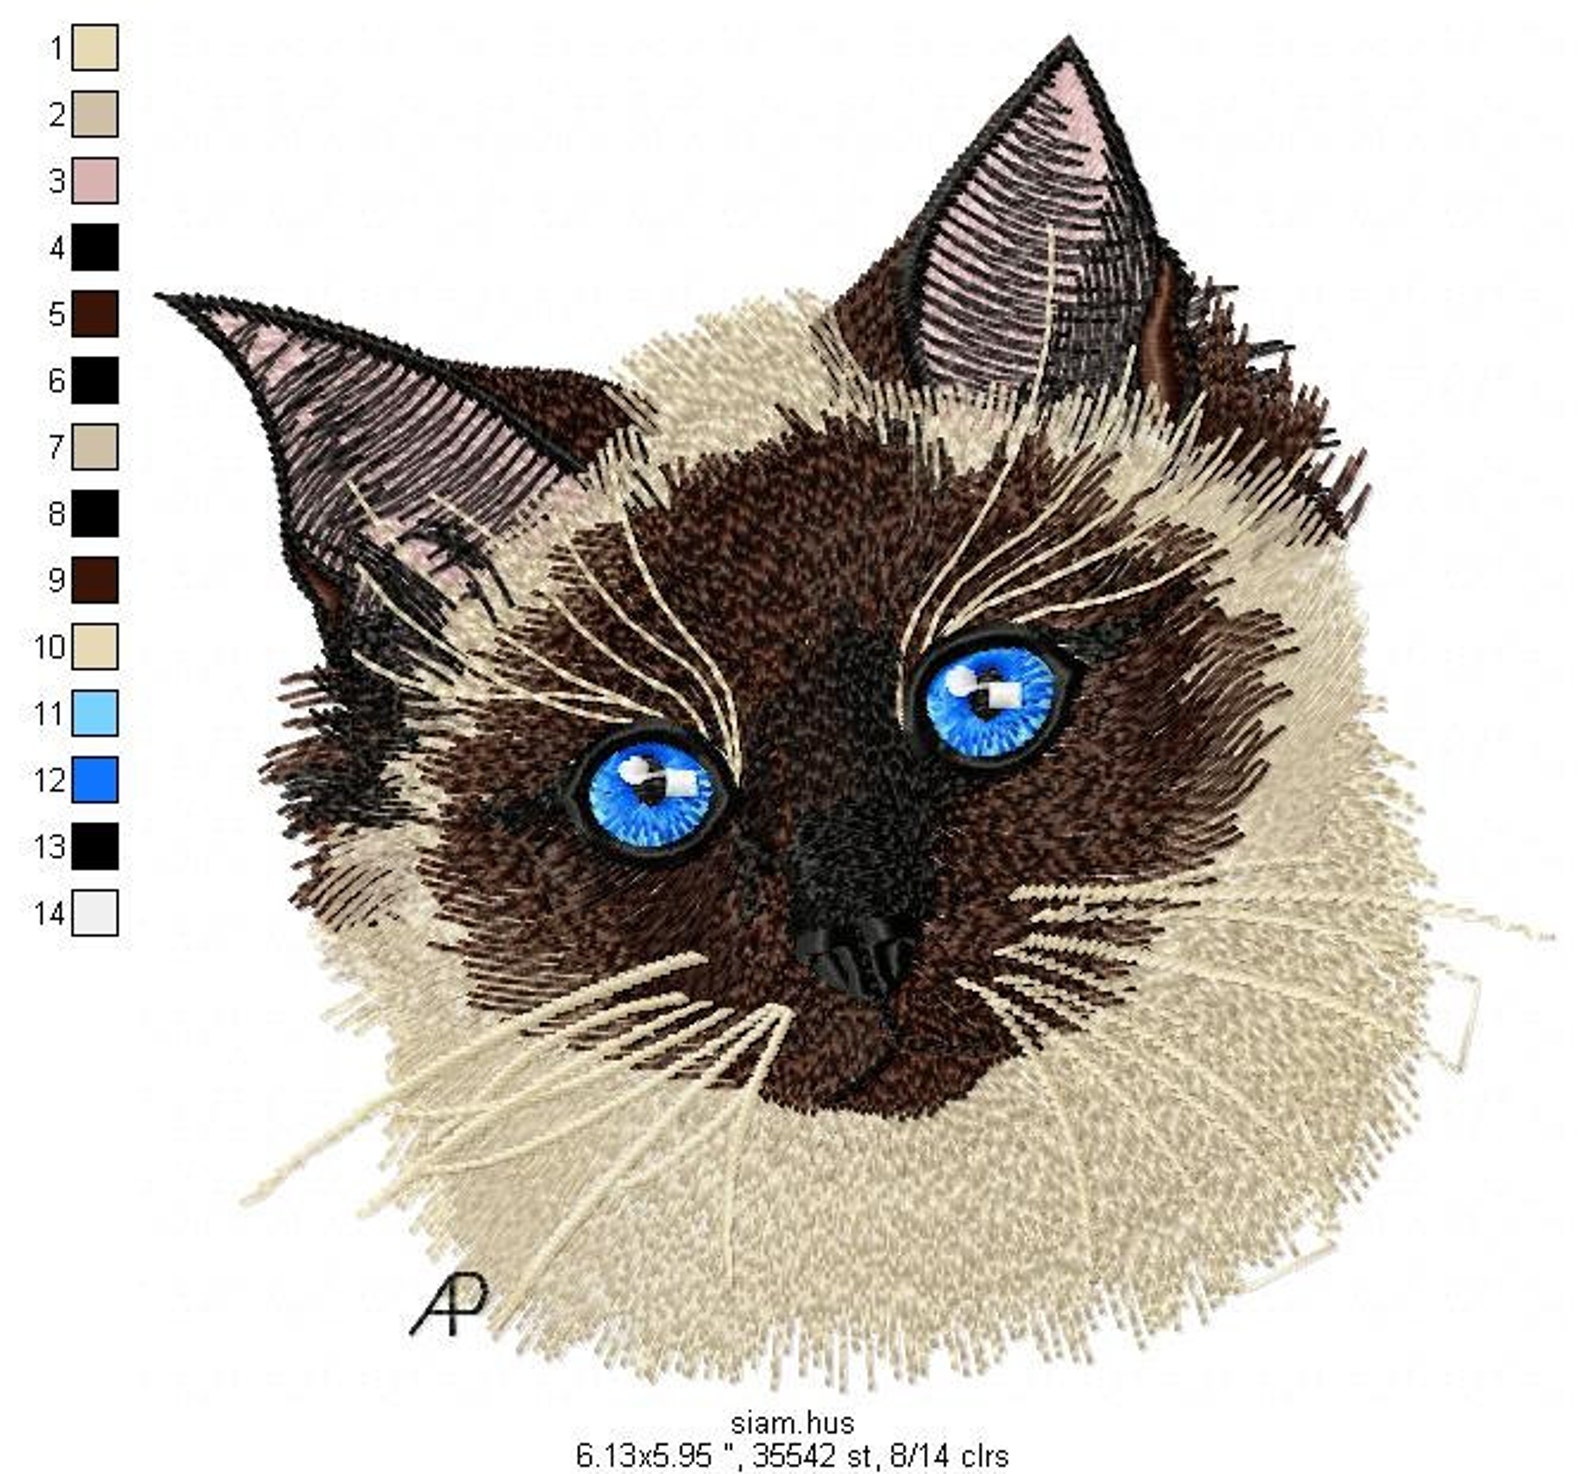  Siamese  cat  embroidery design  Design  for embroidery 